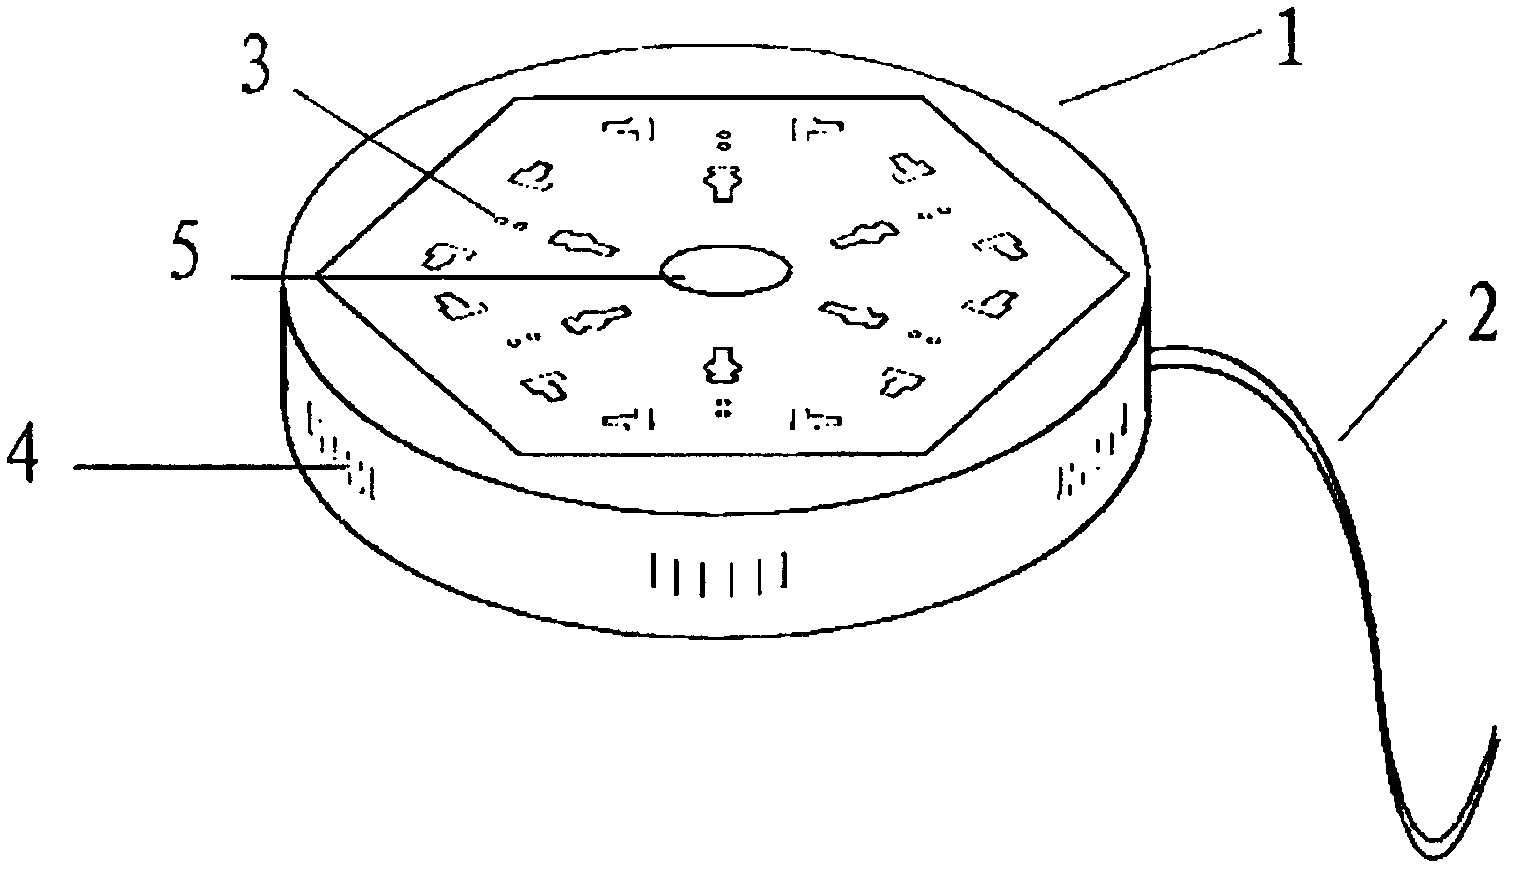 Area-saving type socket with ring-shaped arrangement of jacks